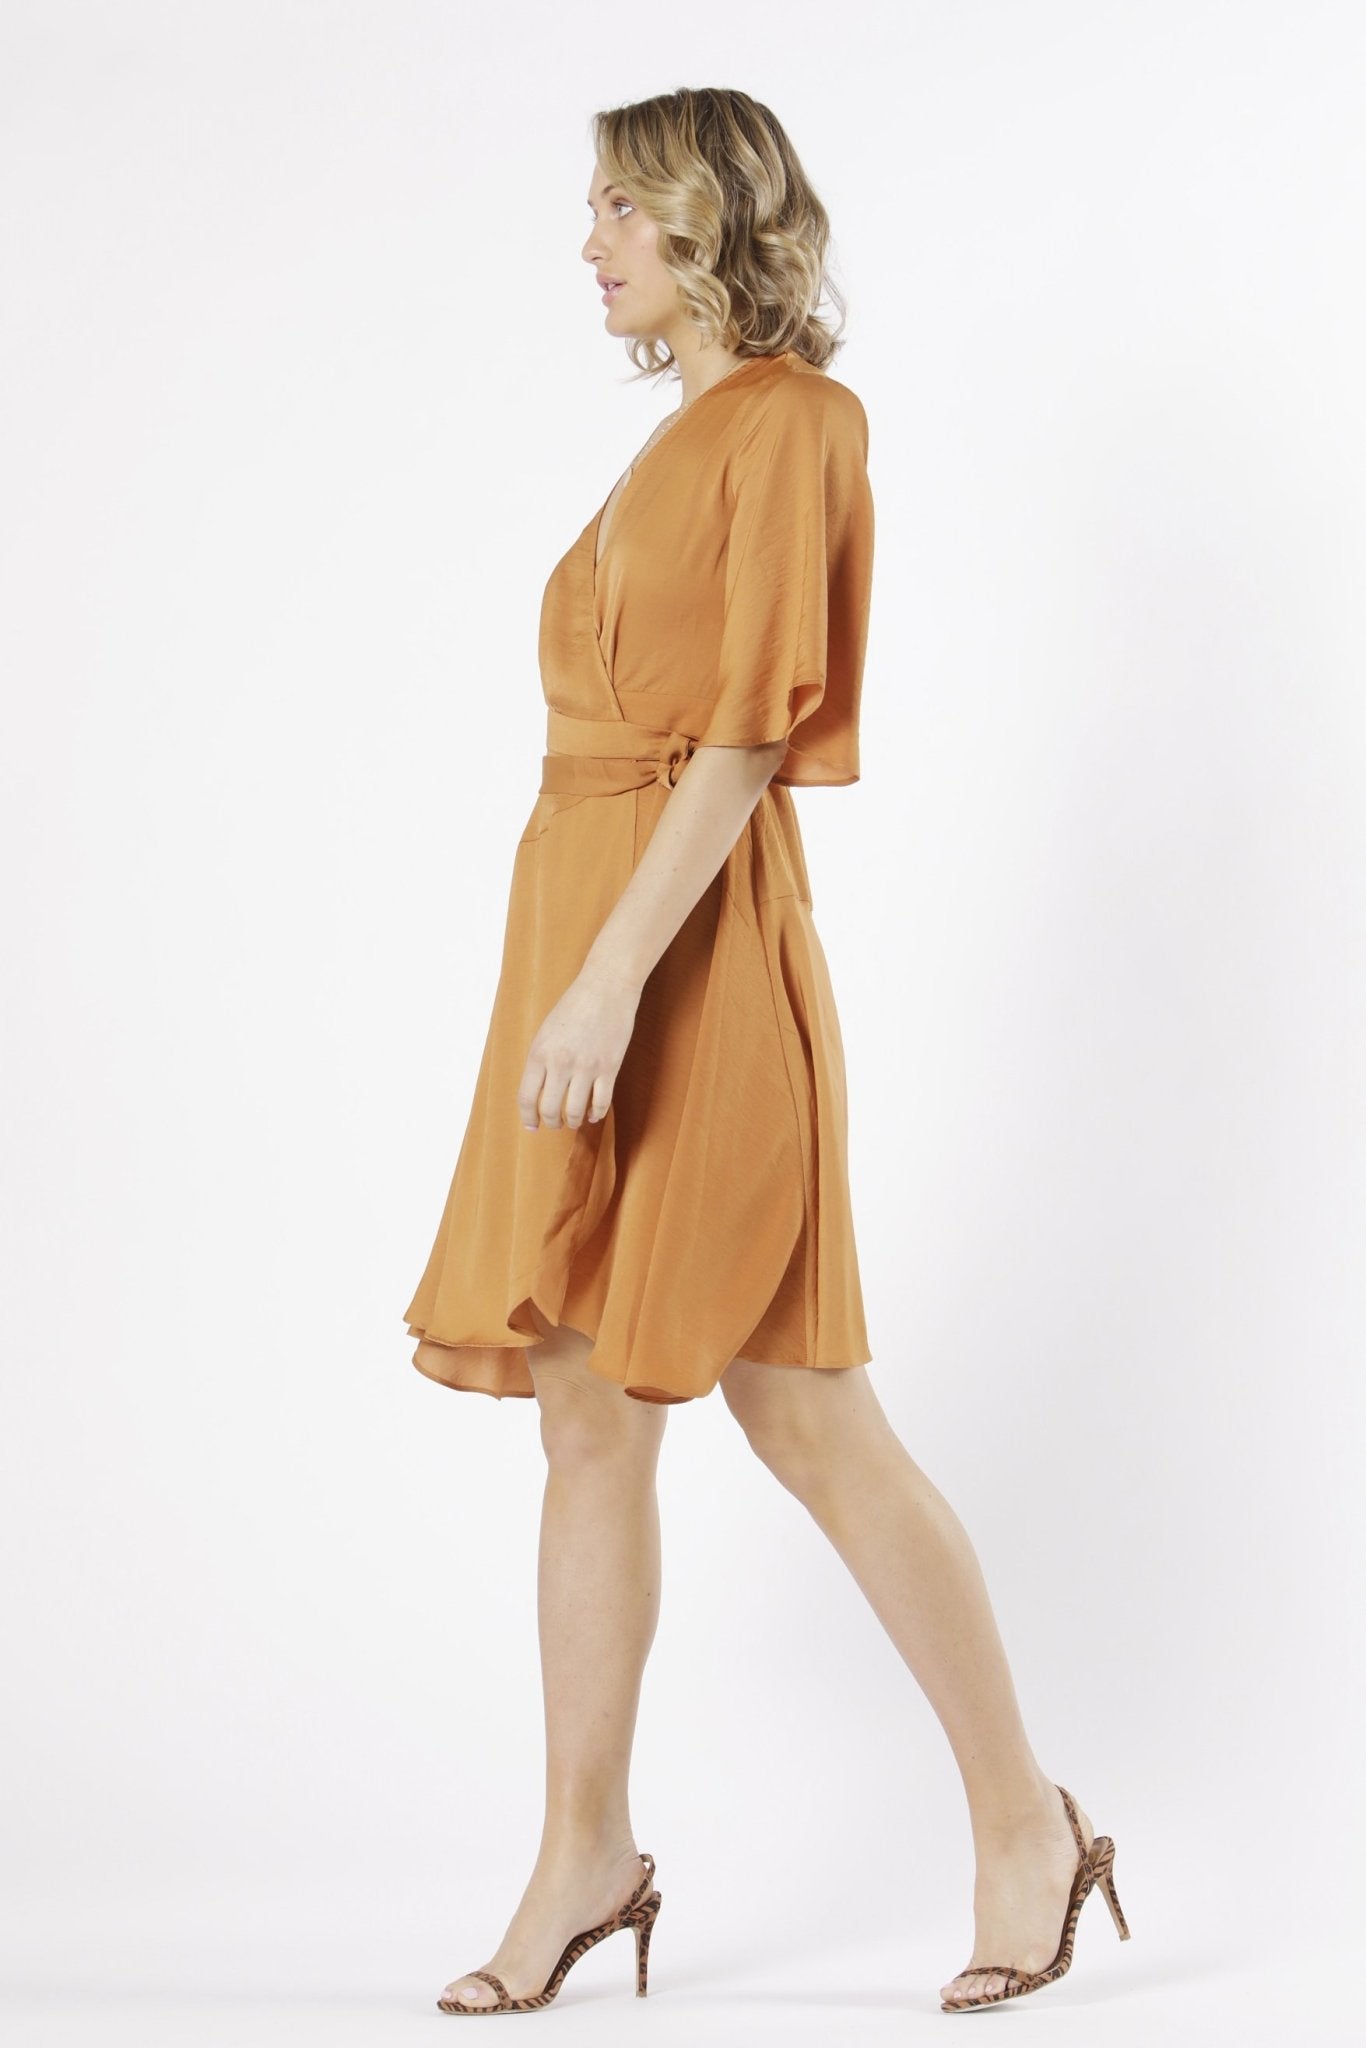 Fate + Becker Mariella Wrap Dress in Apricot - Hey Sara